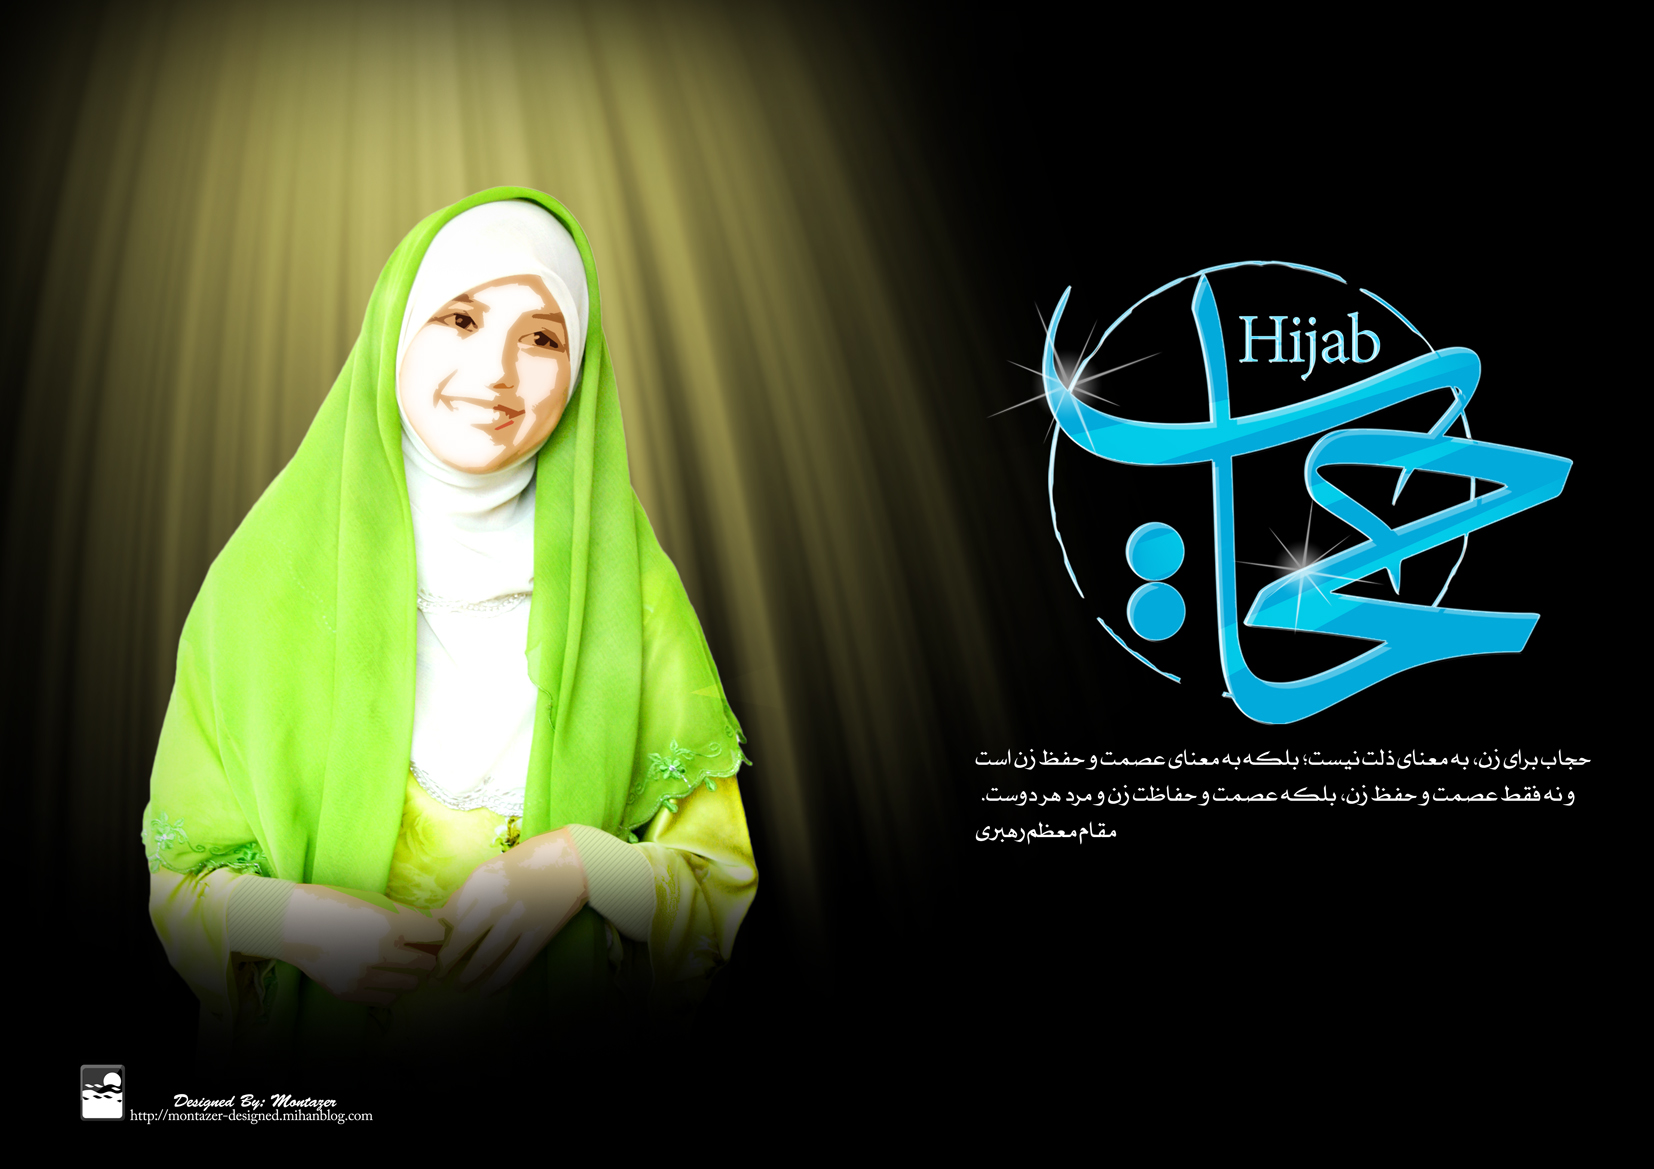 http://montazer113.persiangig.com/image/hijab.jpg